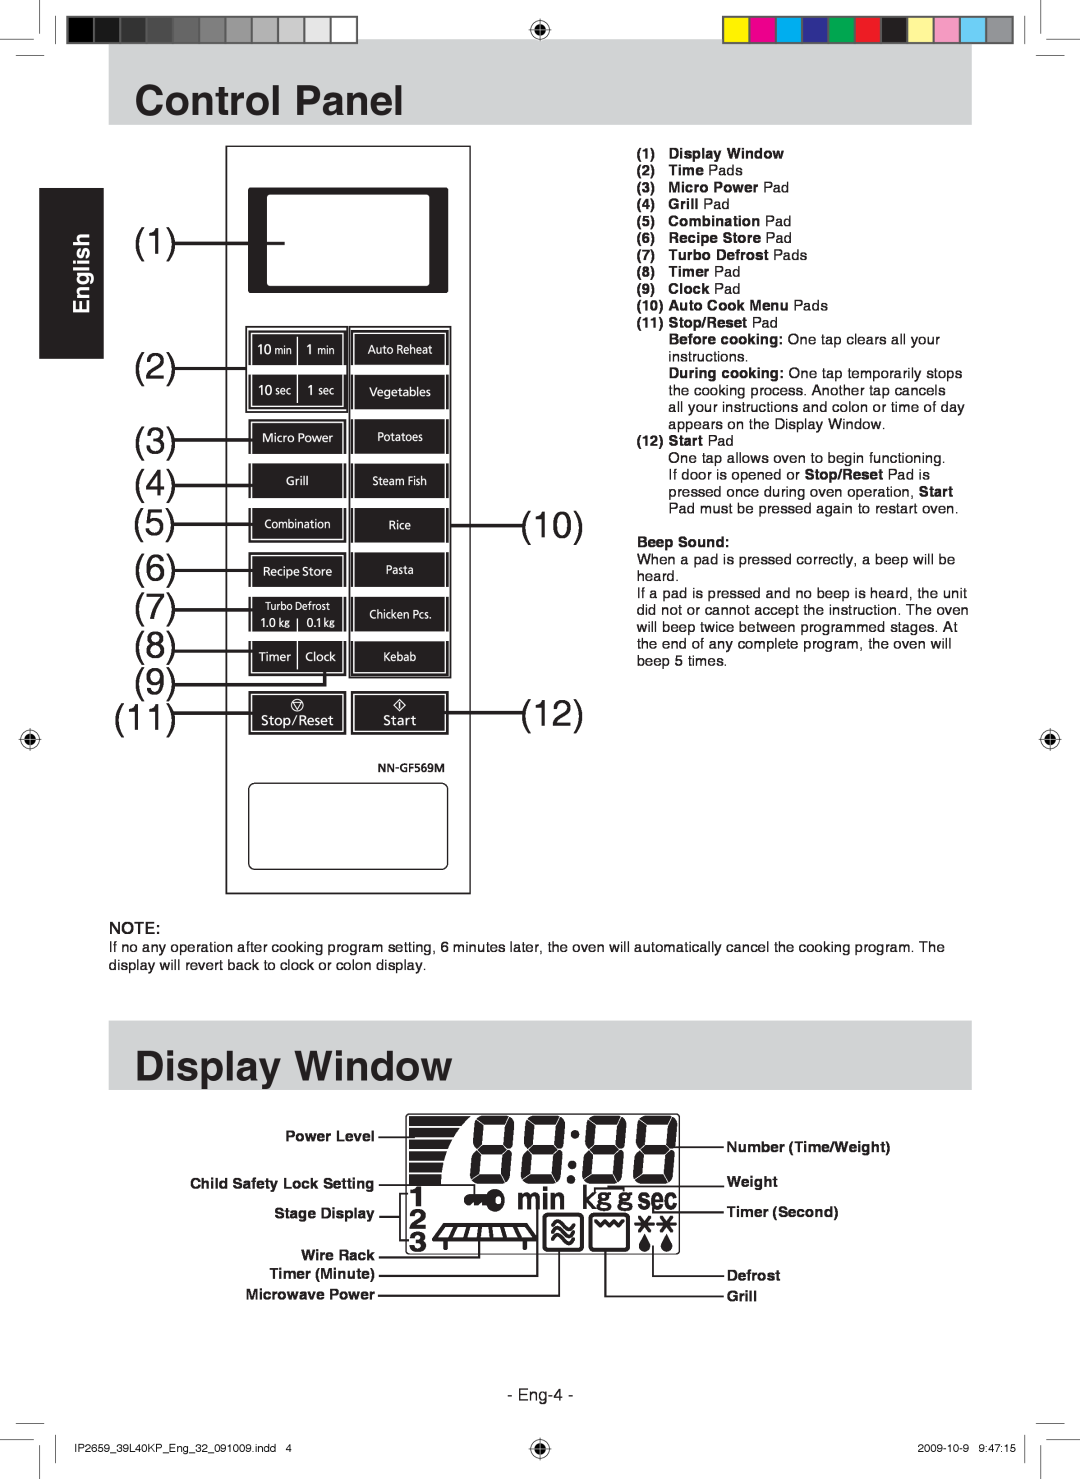 Panasonic NN-GF569M manual Control Panel, Display Window, English, Eng-4 